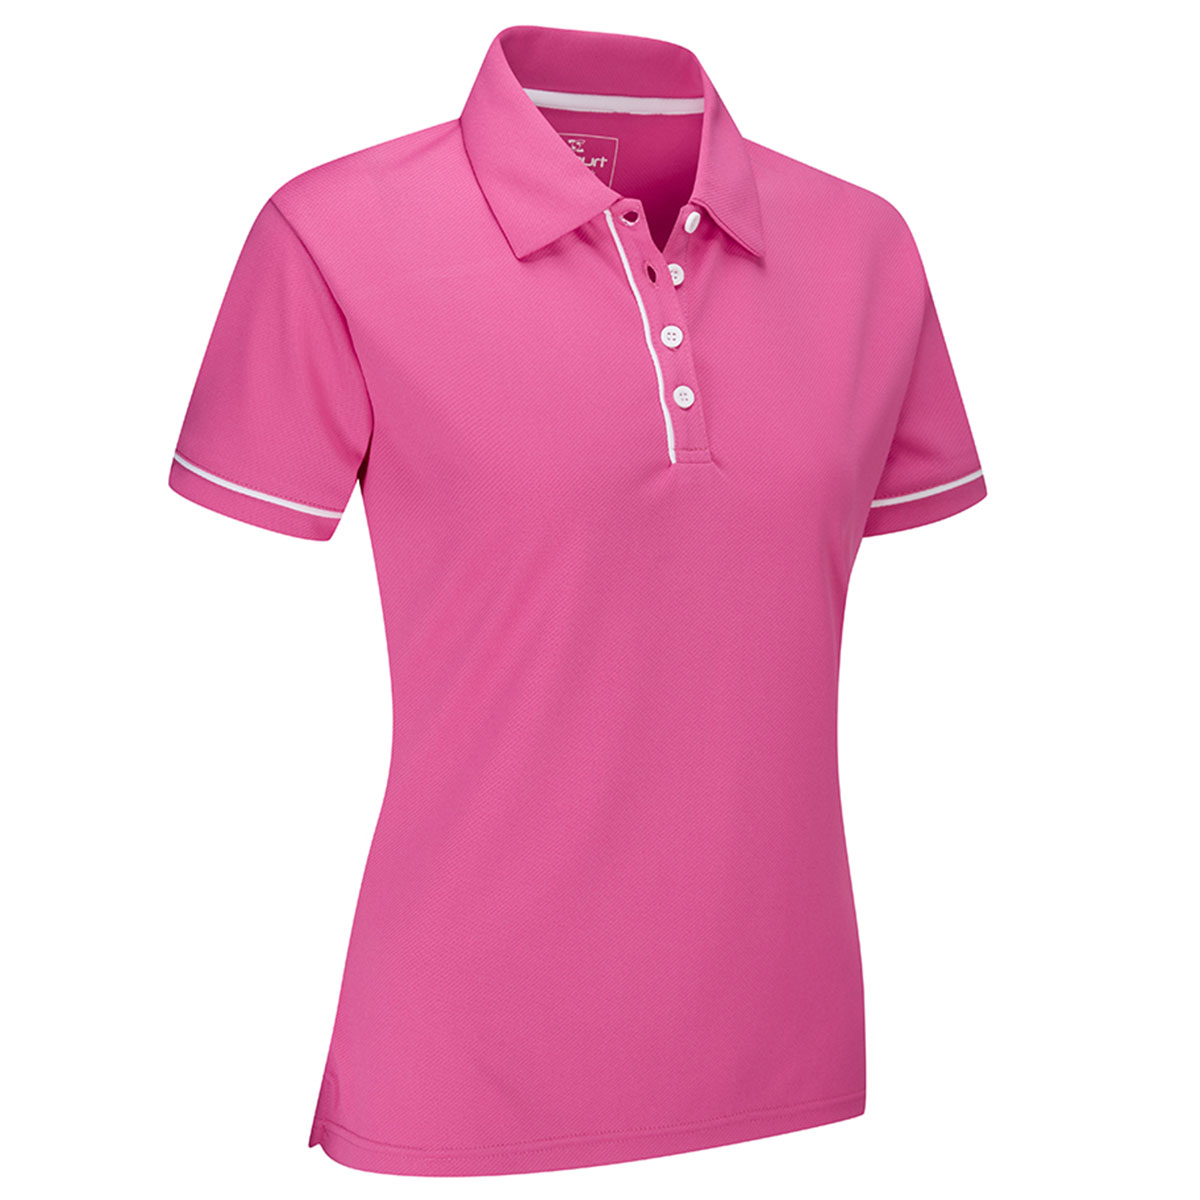 Stuburt Sport-Tech Ladies Polo Shirt from american golf